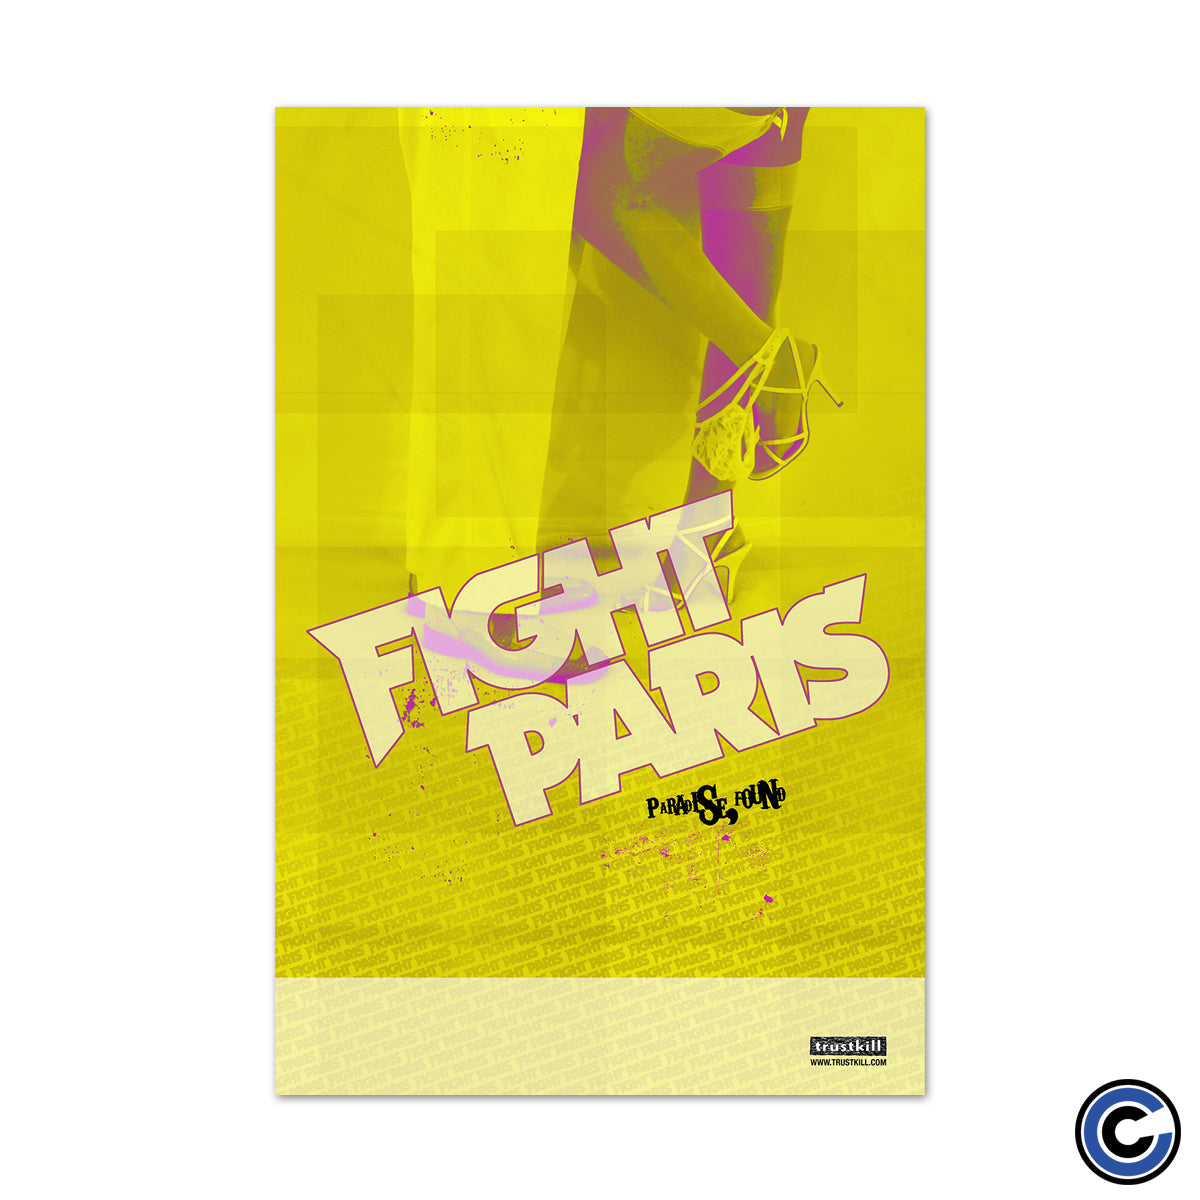 Fight Paris "Paradise Found" Poster